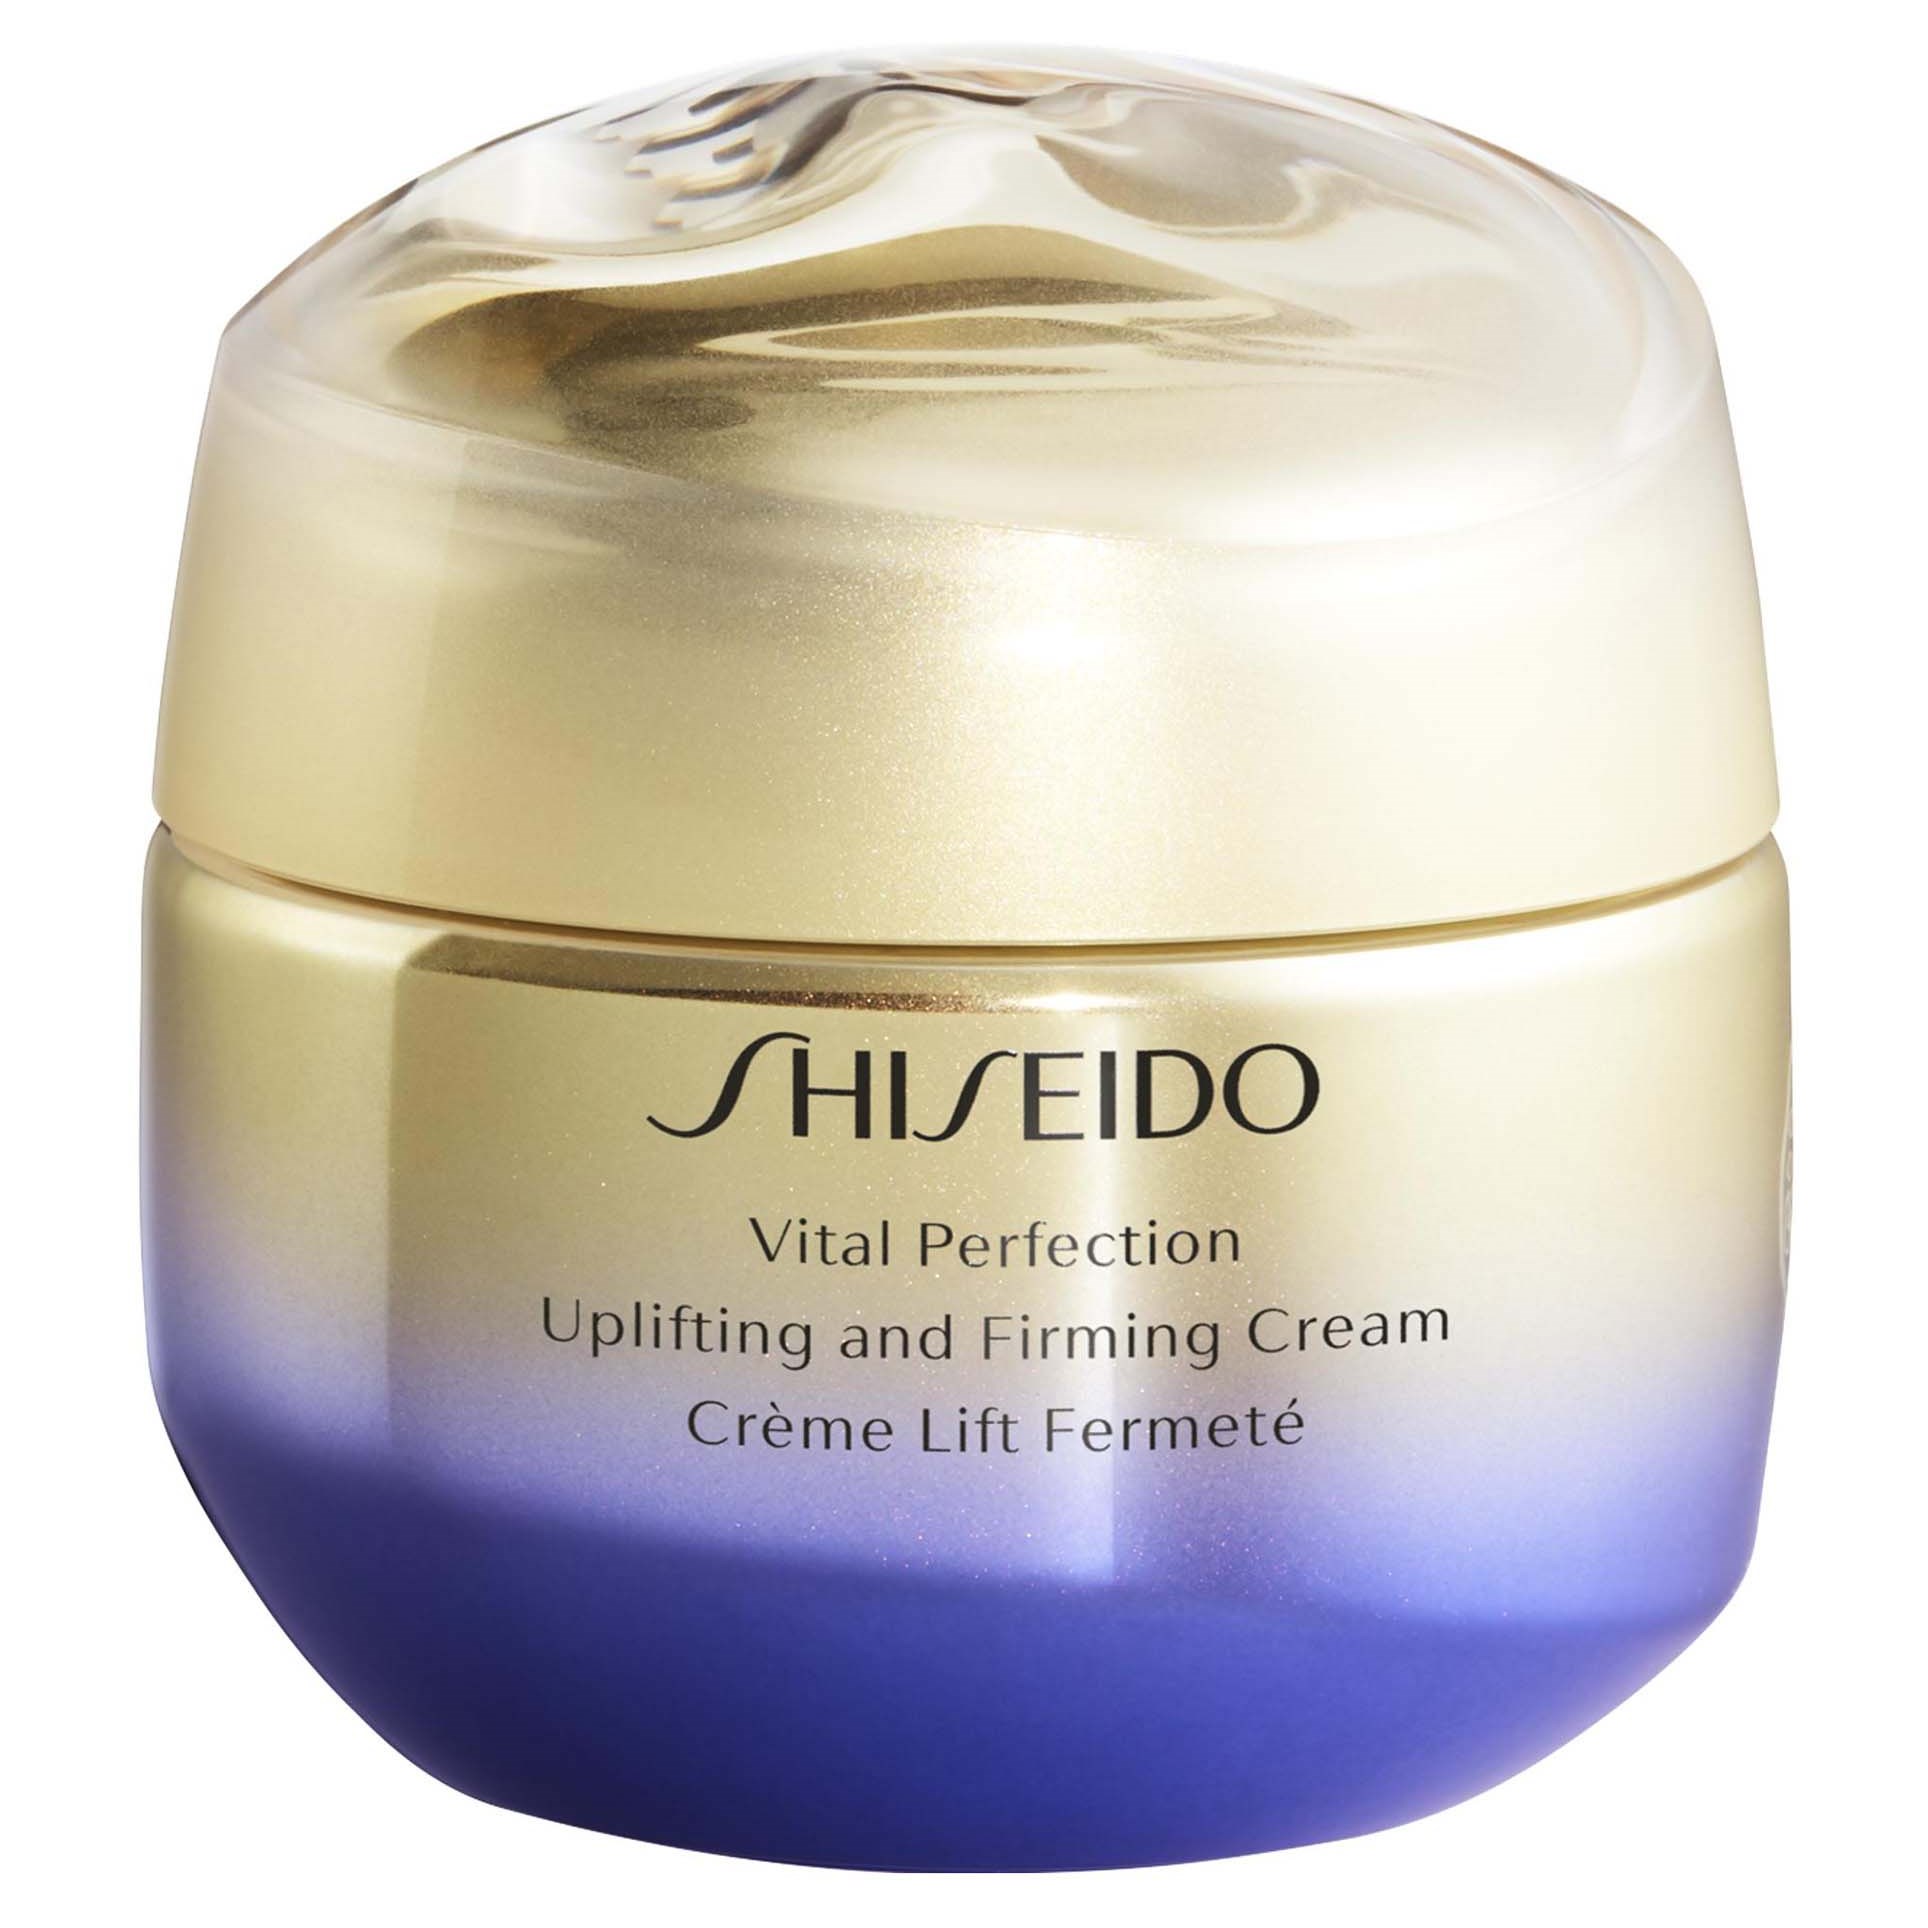 Shiseido Vital Perfection Uplifting and firming cream